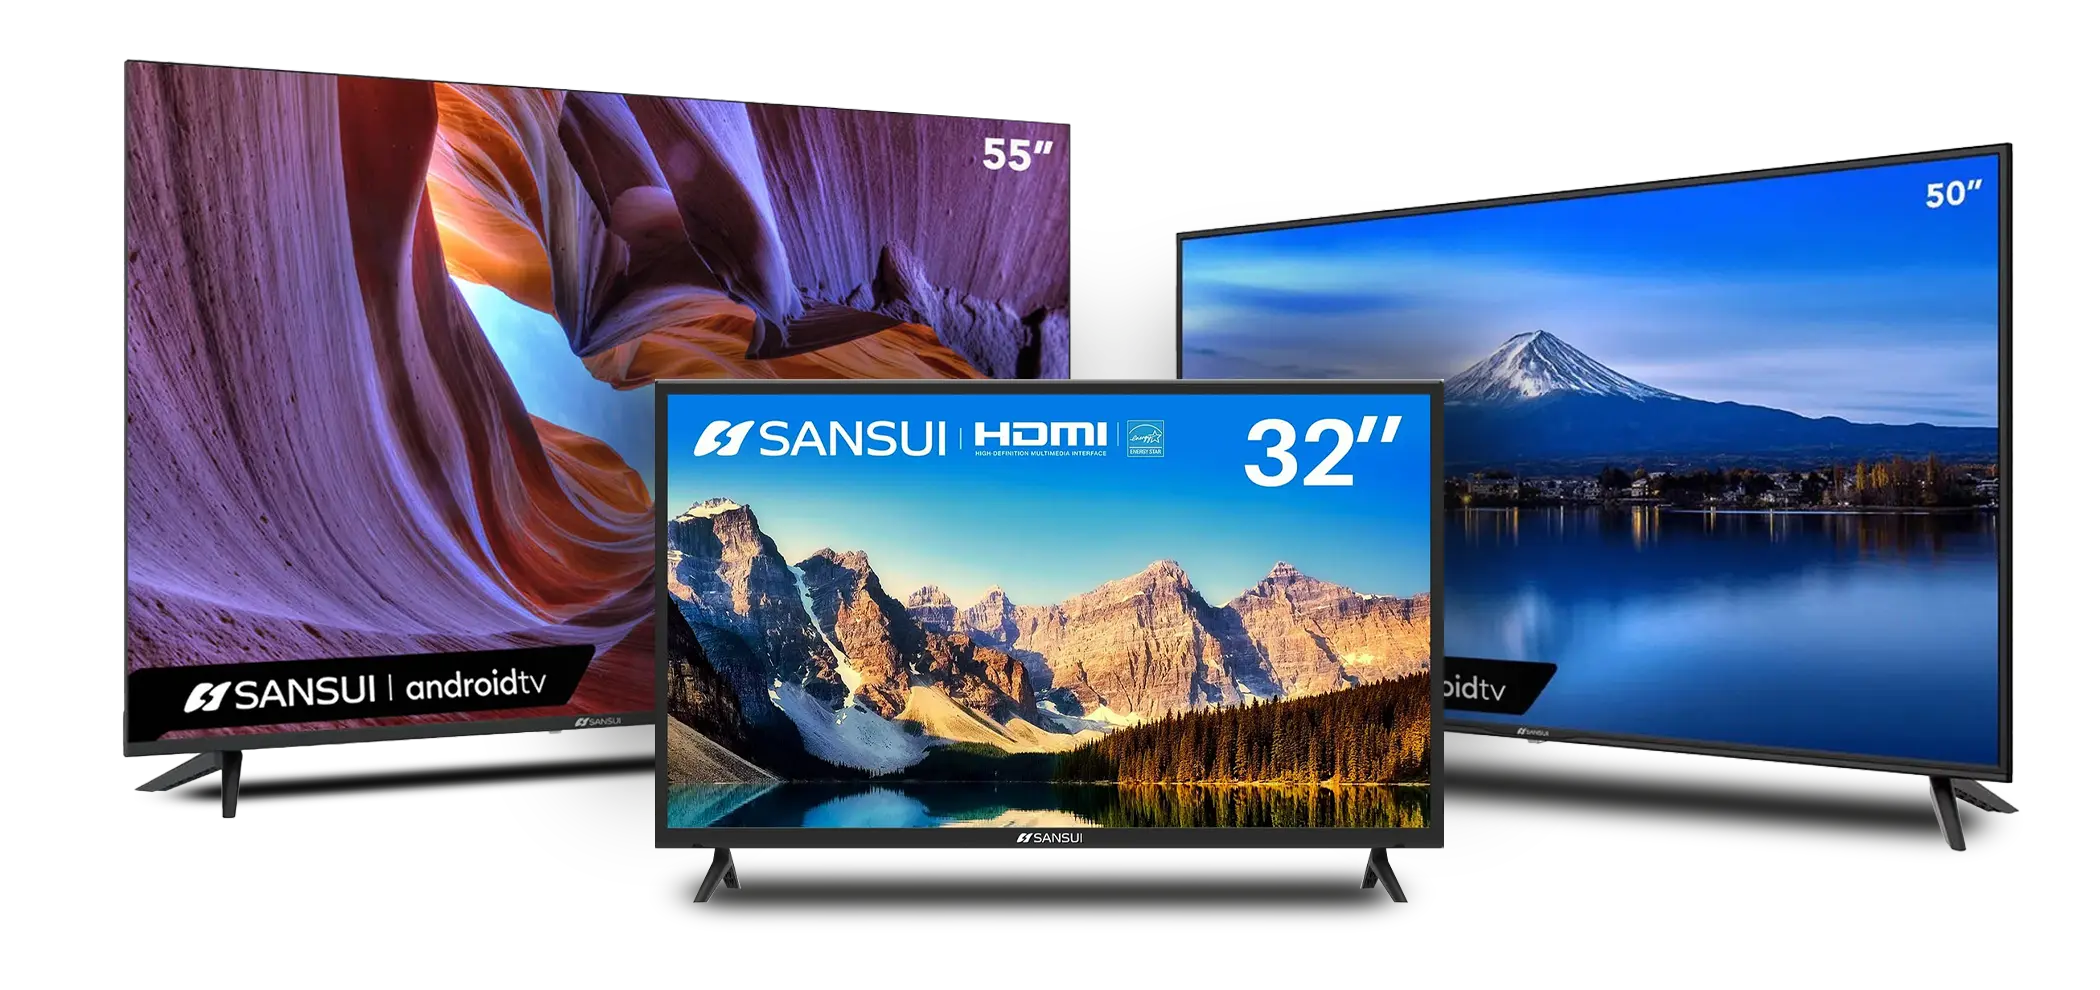 Pantalla Smart TV Sansui LED de 24 pulgadas Full HD SMX24T1HN con